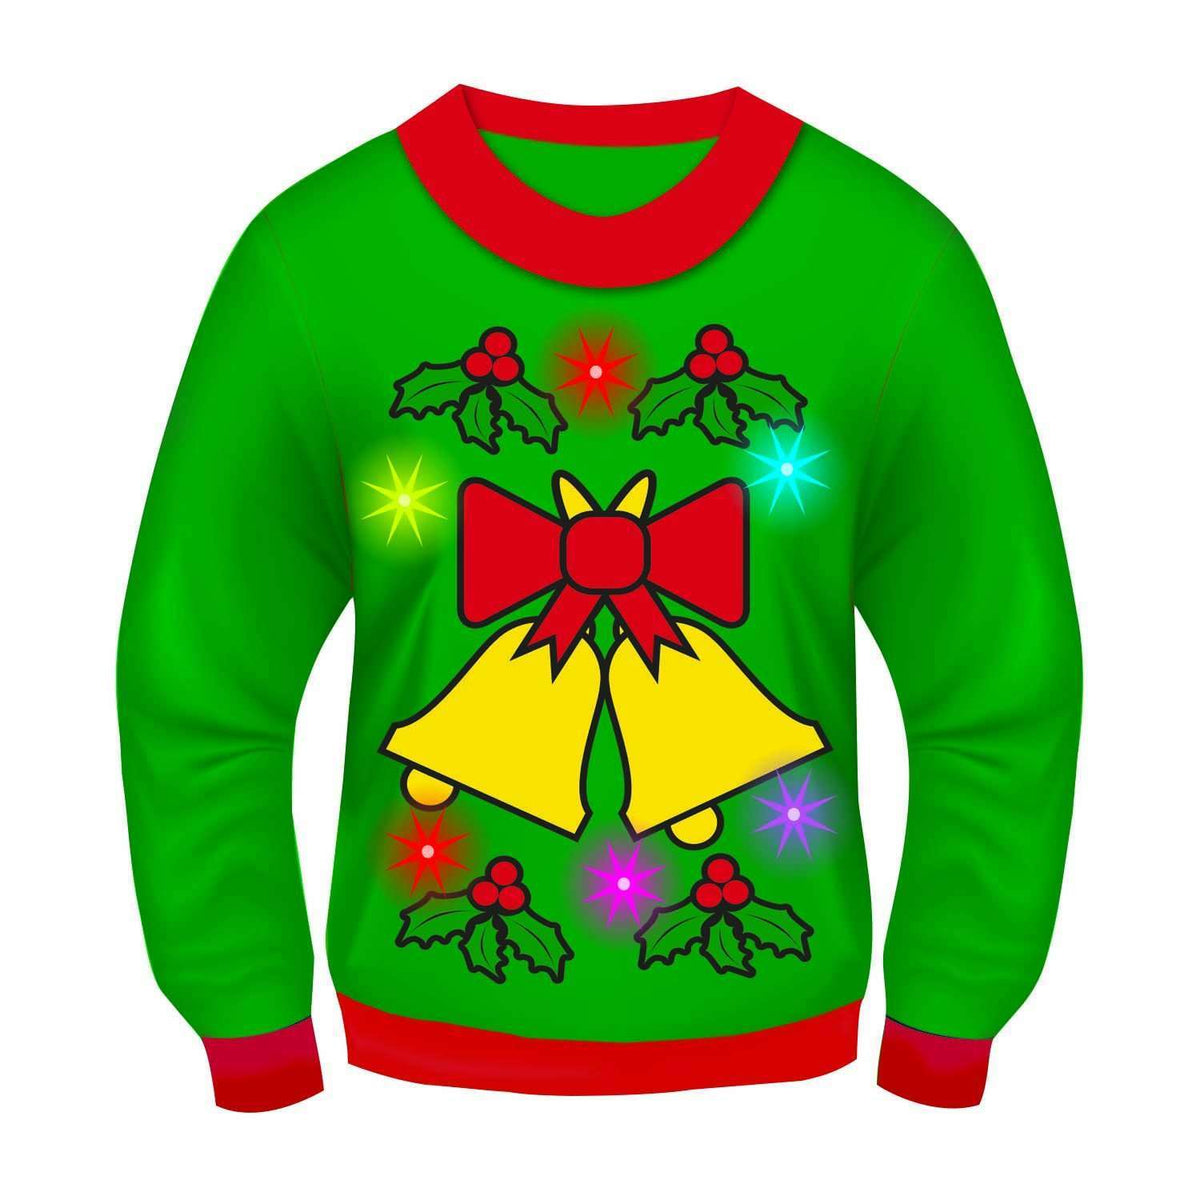 Jingle Bells Light Up & Sound Sweater